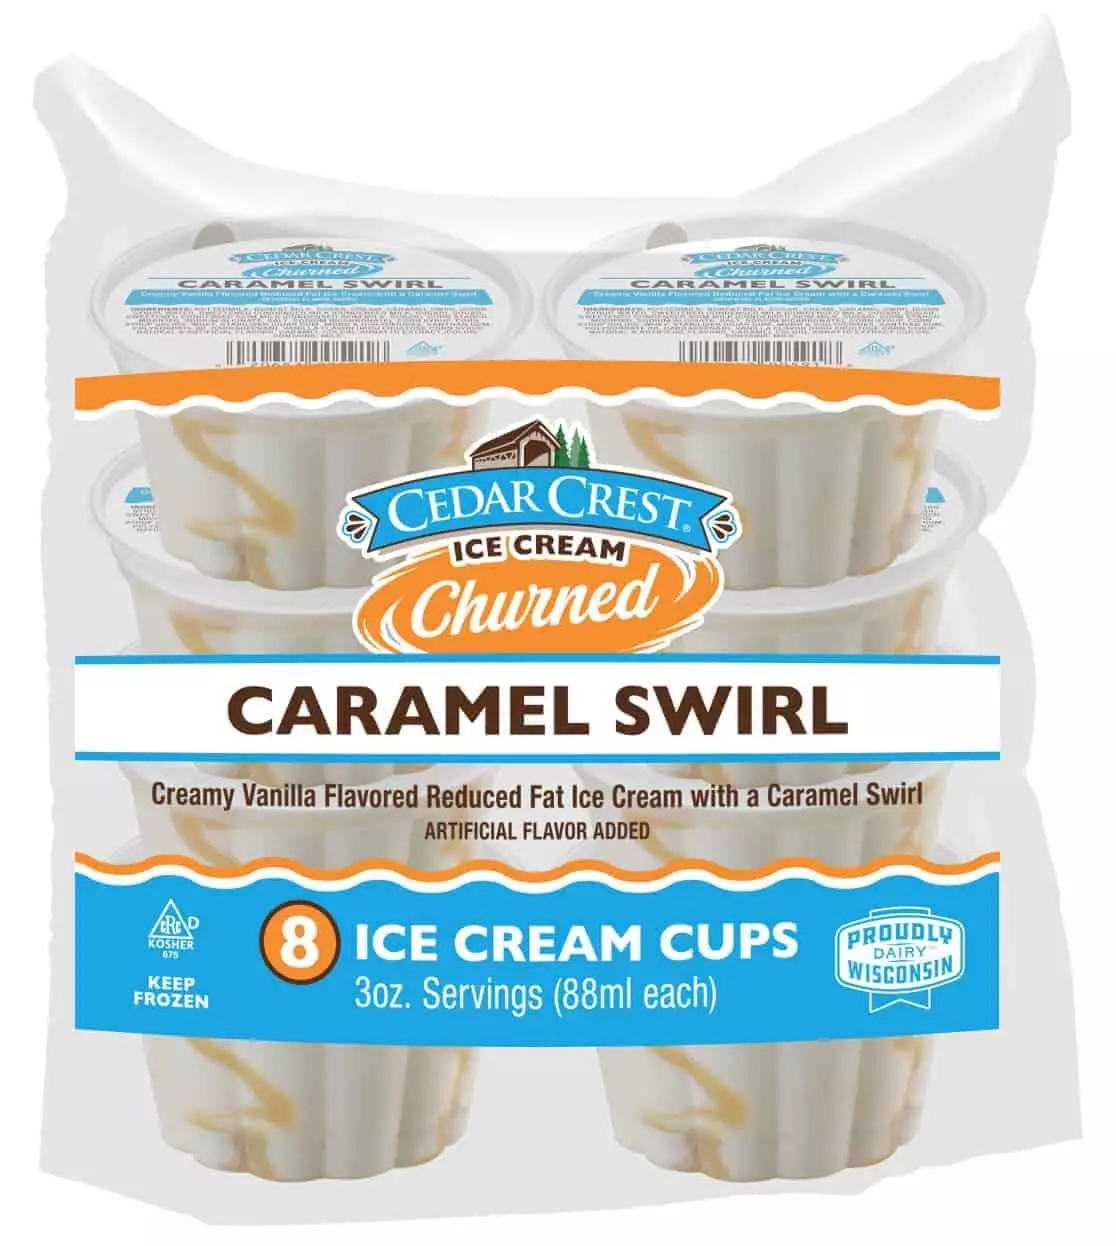 https://cedarcresticecream.com/wp-content/uploads/2020/05/Churned-Caramel-Swirl-Cups.jpg